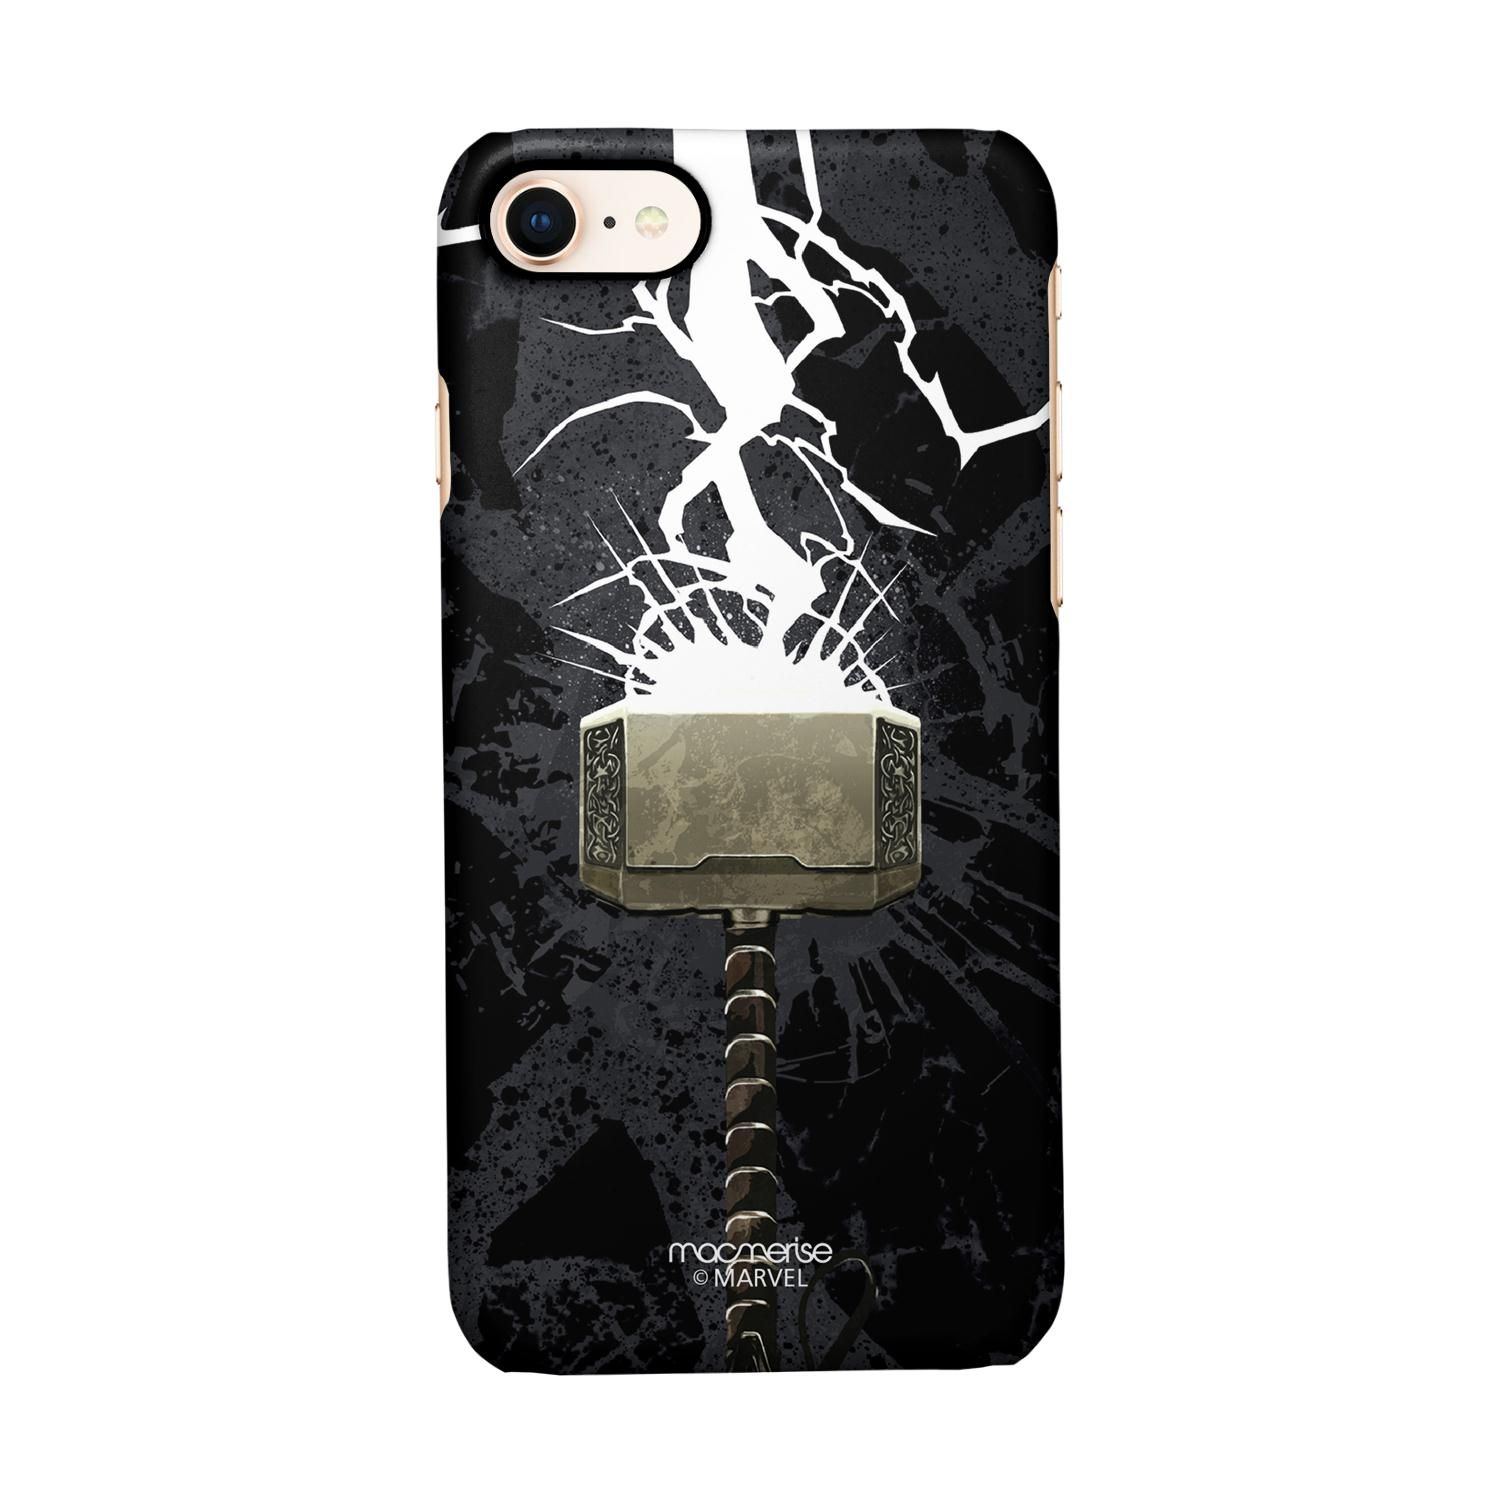 Buy The Thunderous Hammer - Sleek Phone Case for iPhone 7 Online